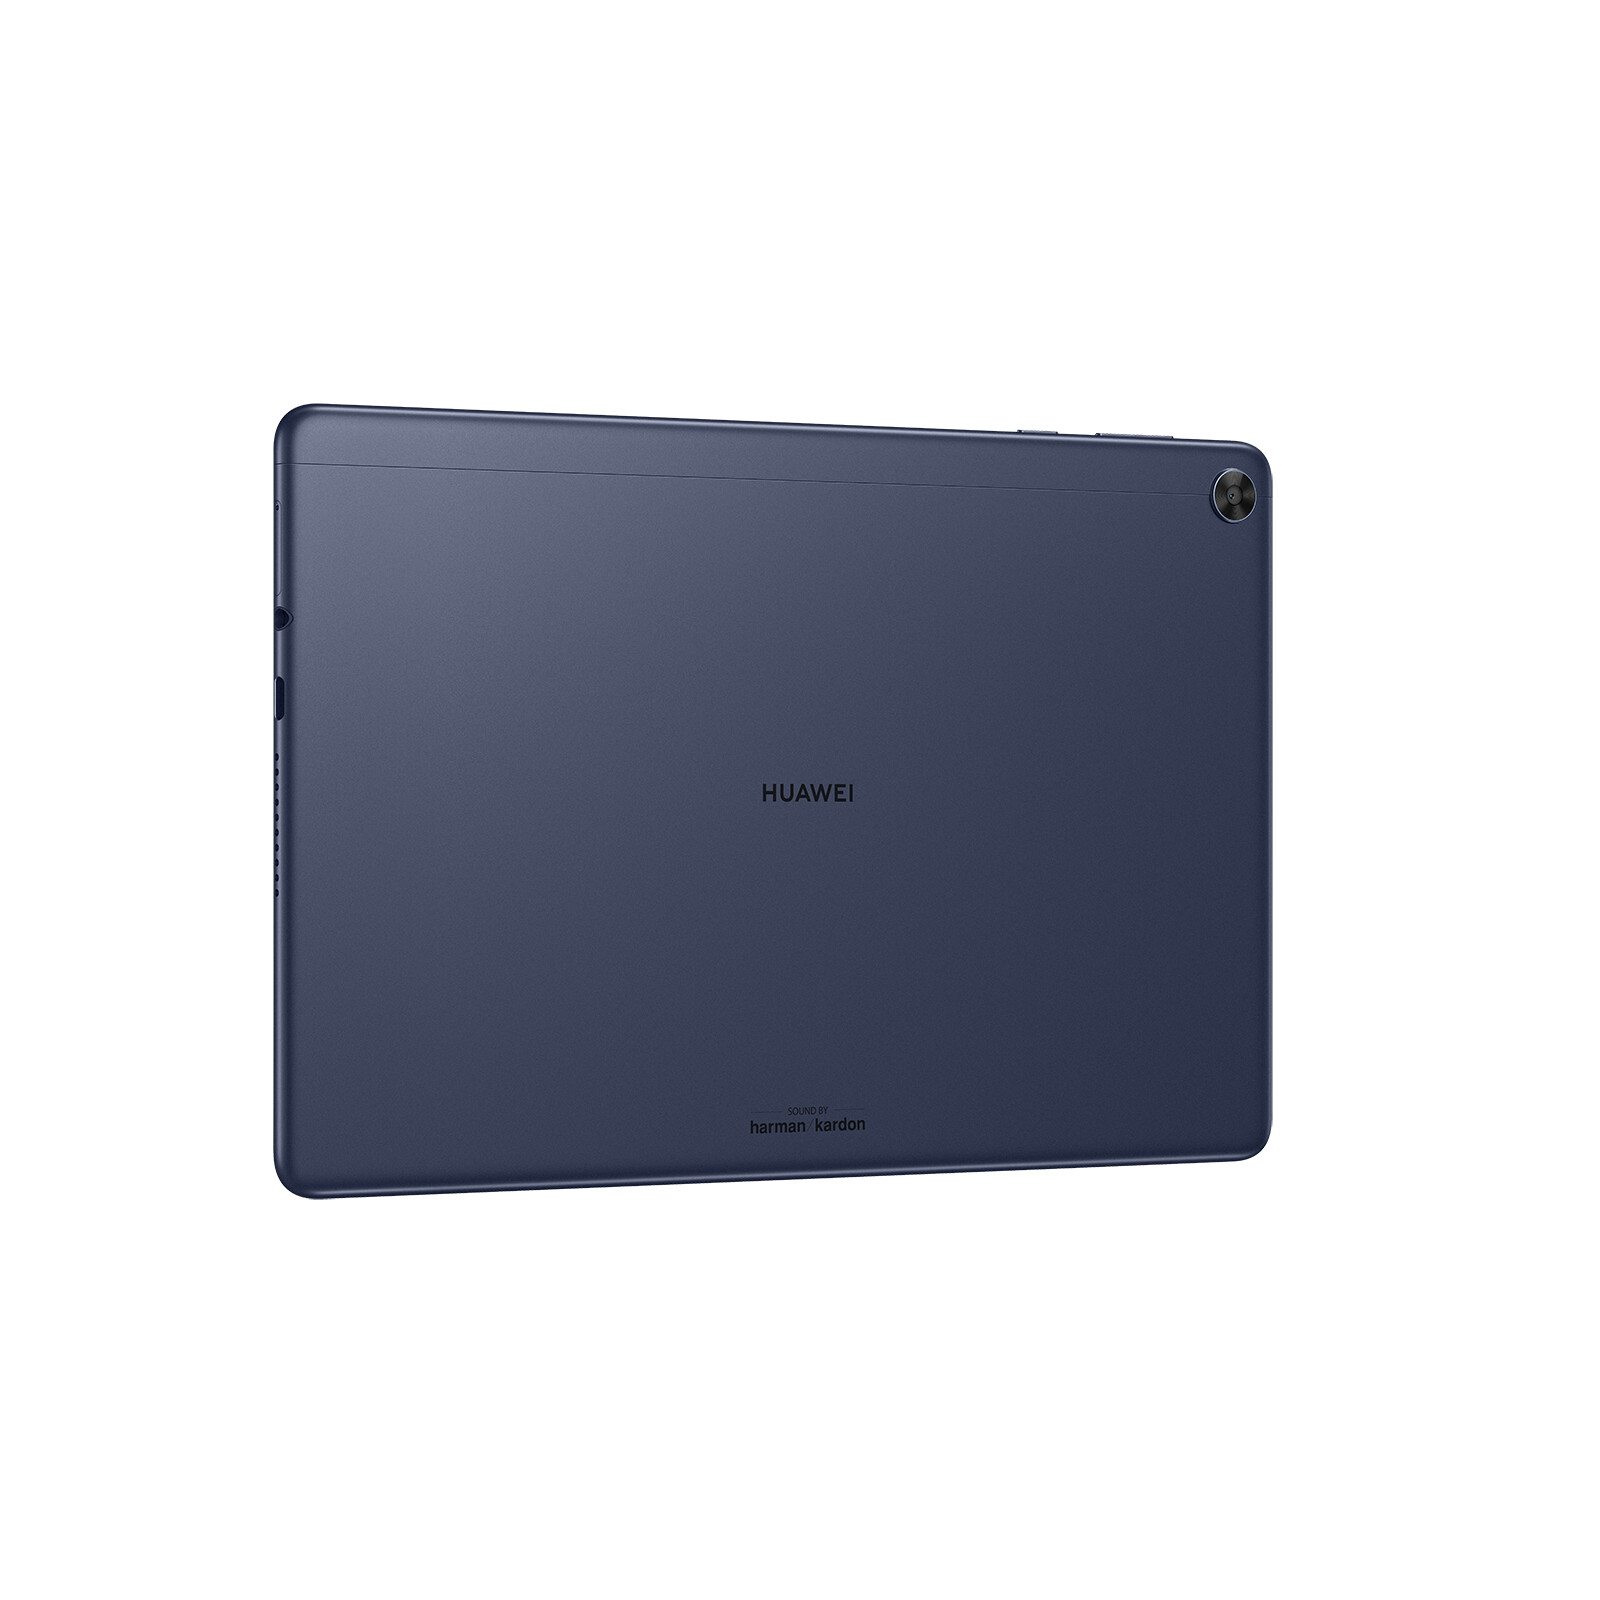 Huawei MatePad T10s wifi 32GB blue